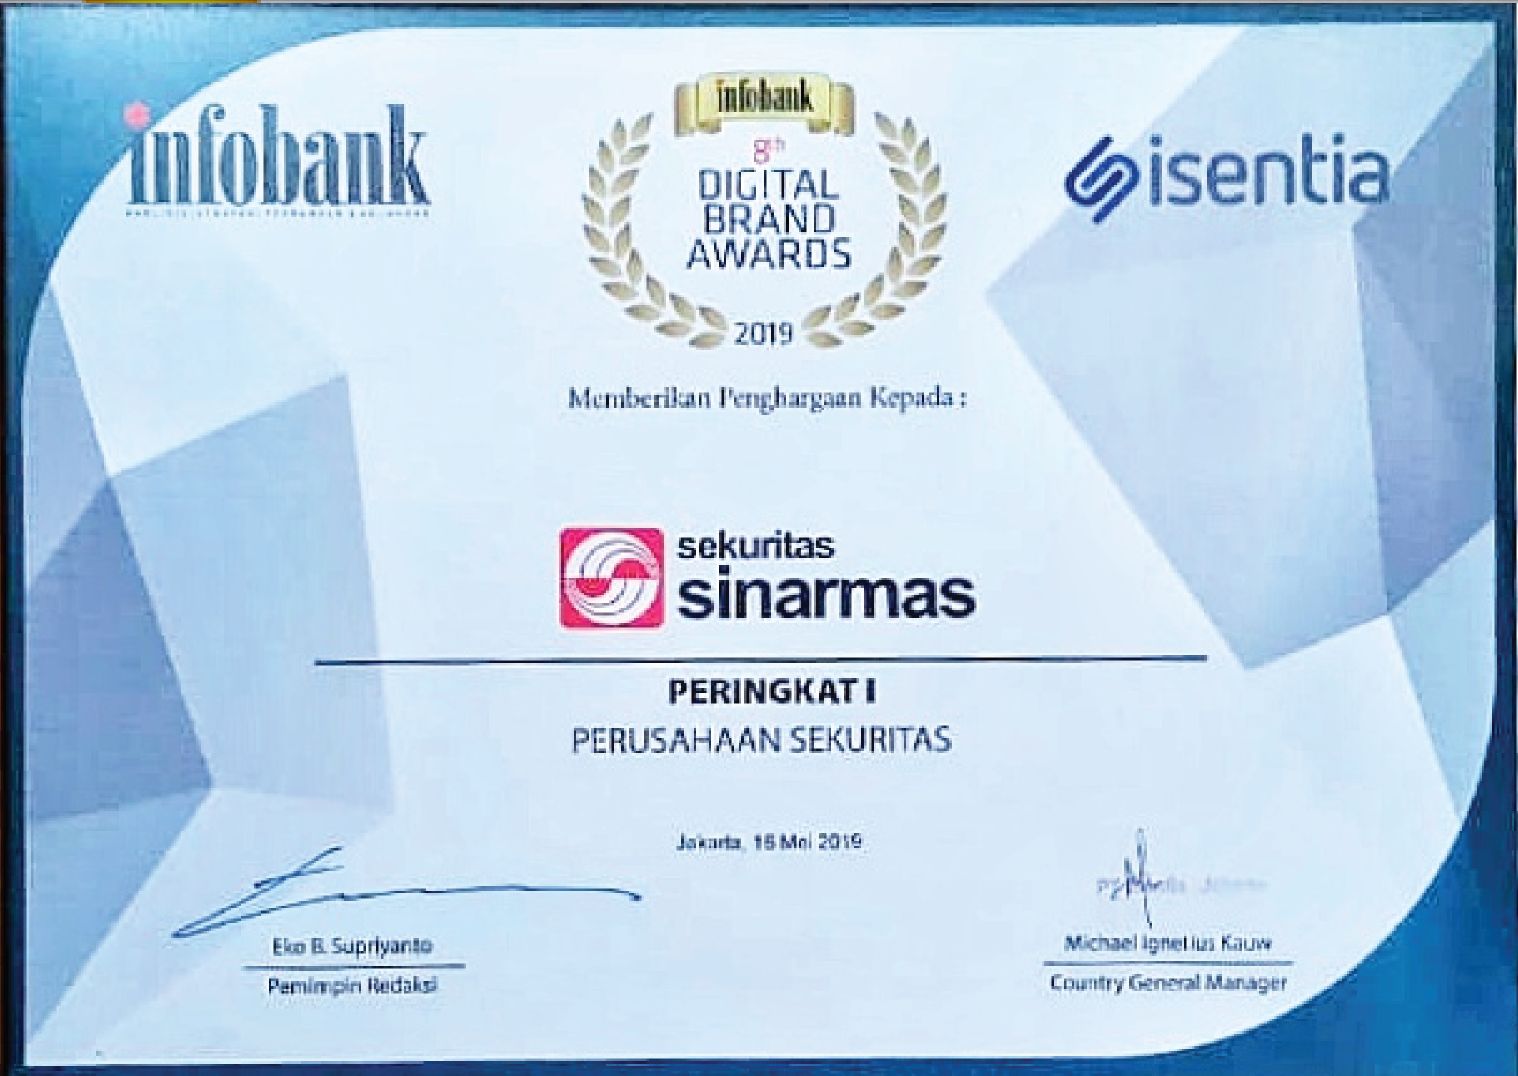 Infobank & Isentia : Digital Brand Awards 2019